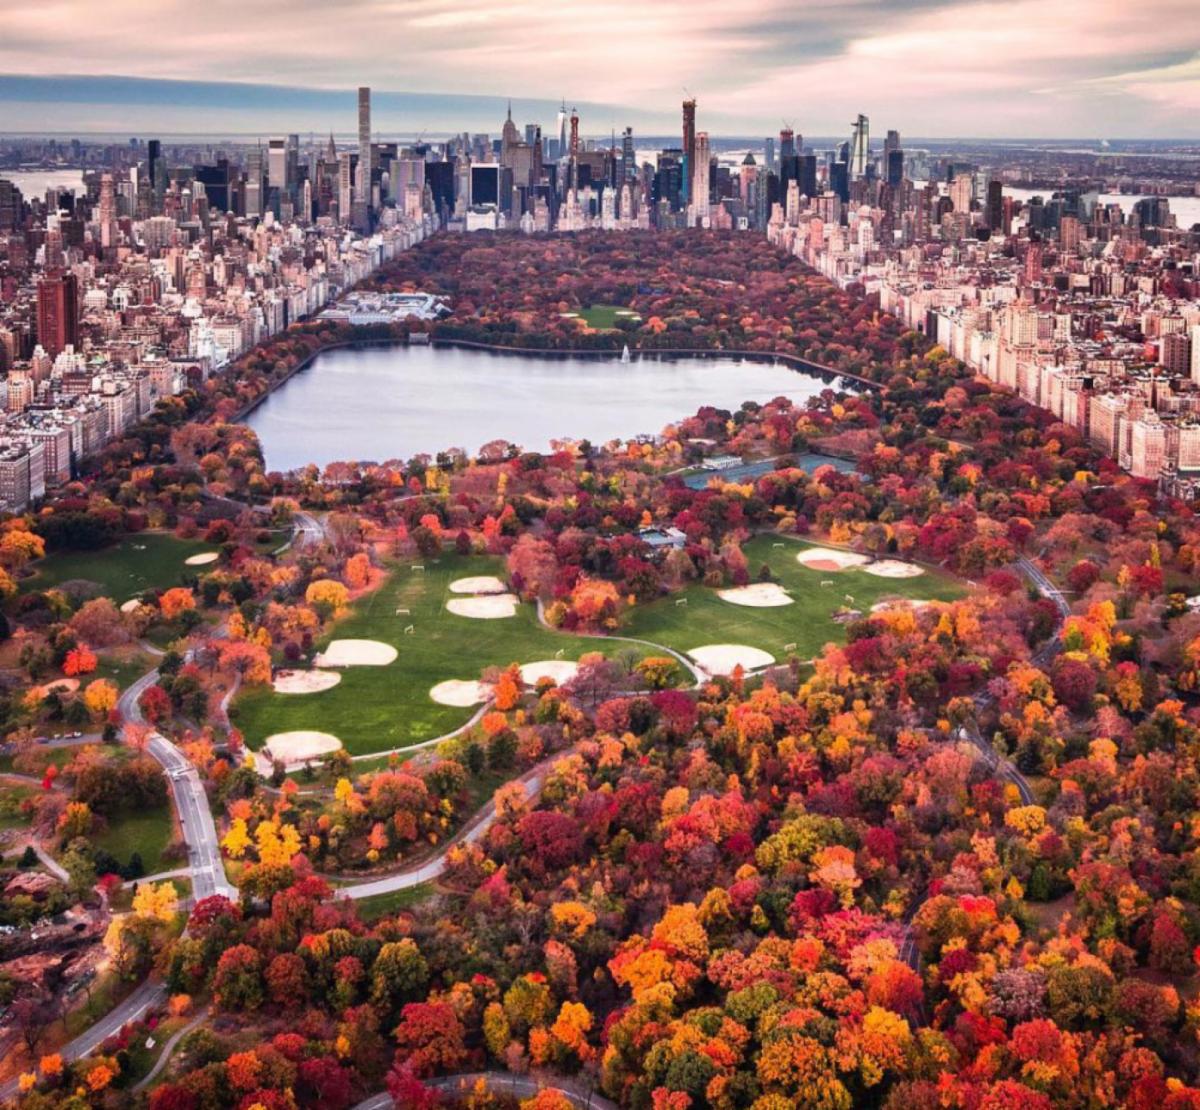 Central Park, New York in Autumn